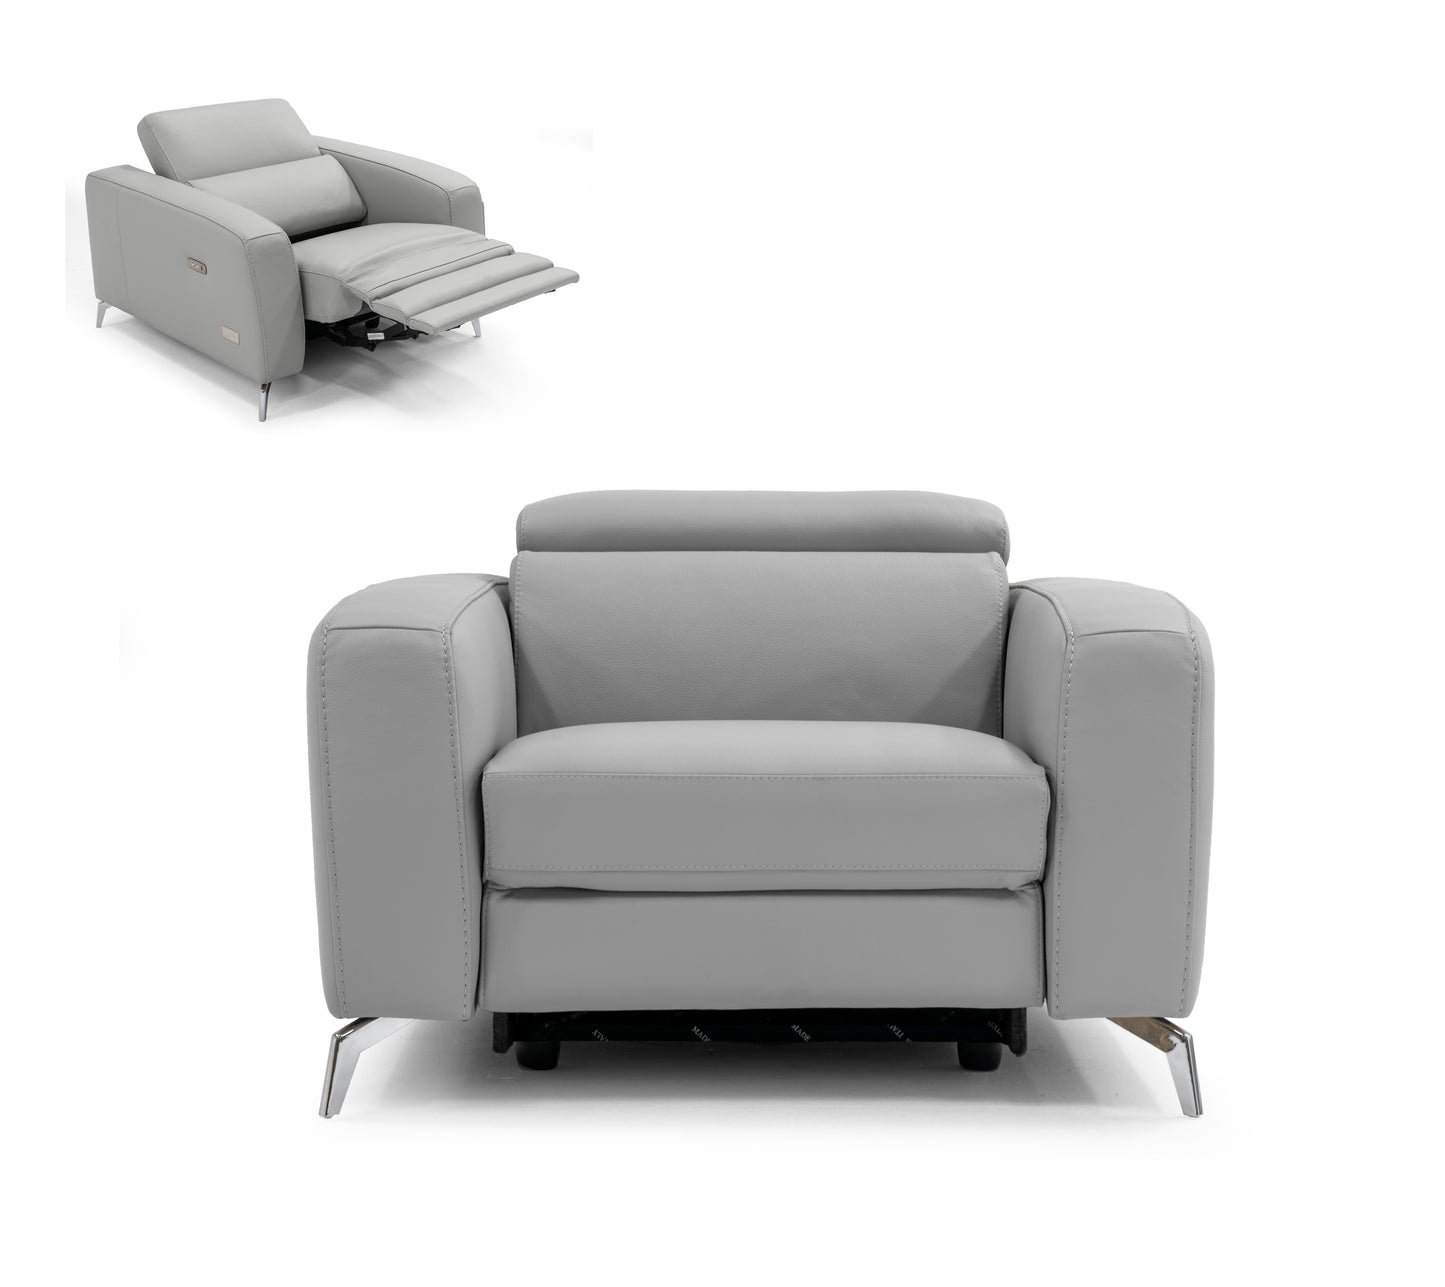 VIG Furniture Coronelli Turin Italian Grey Leather Recliner Chair